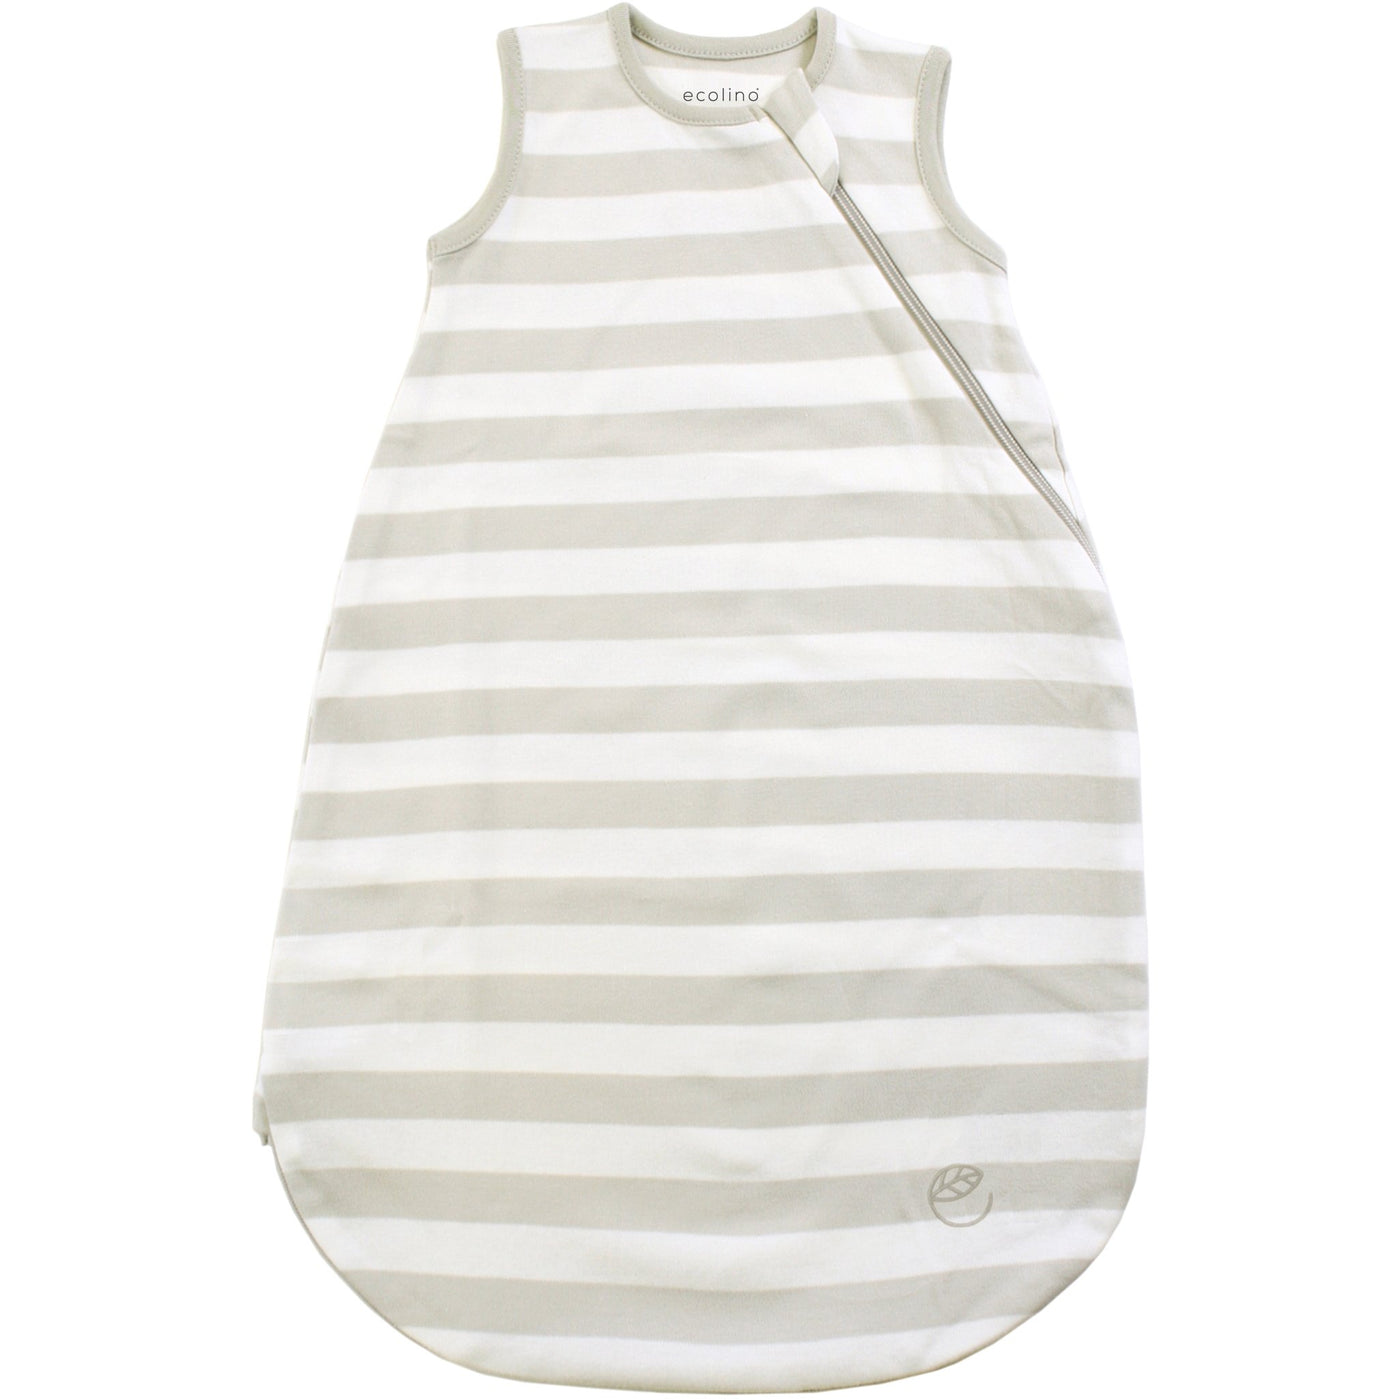 Imperfect Ecolino Organic Cotton Basic Baby Sleep Bag or Sack, Gray